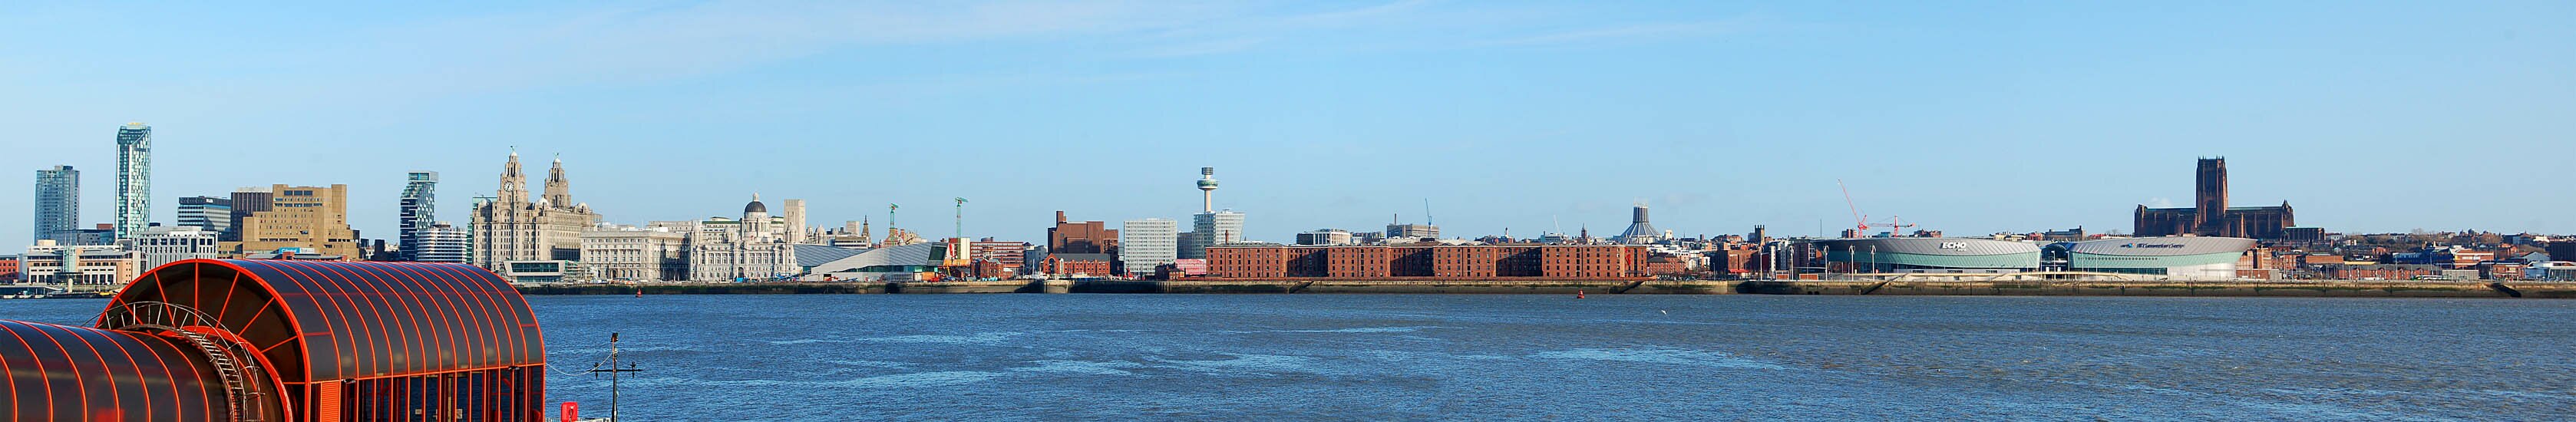 The Liverpool Skyline